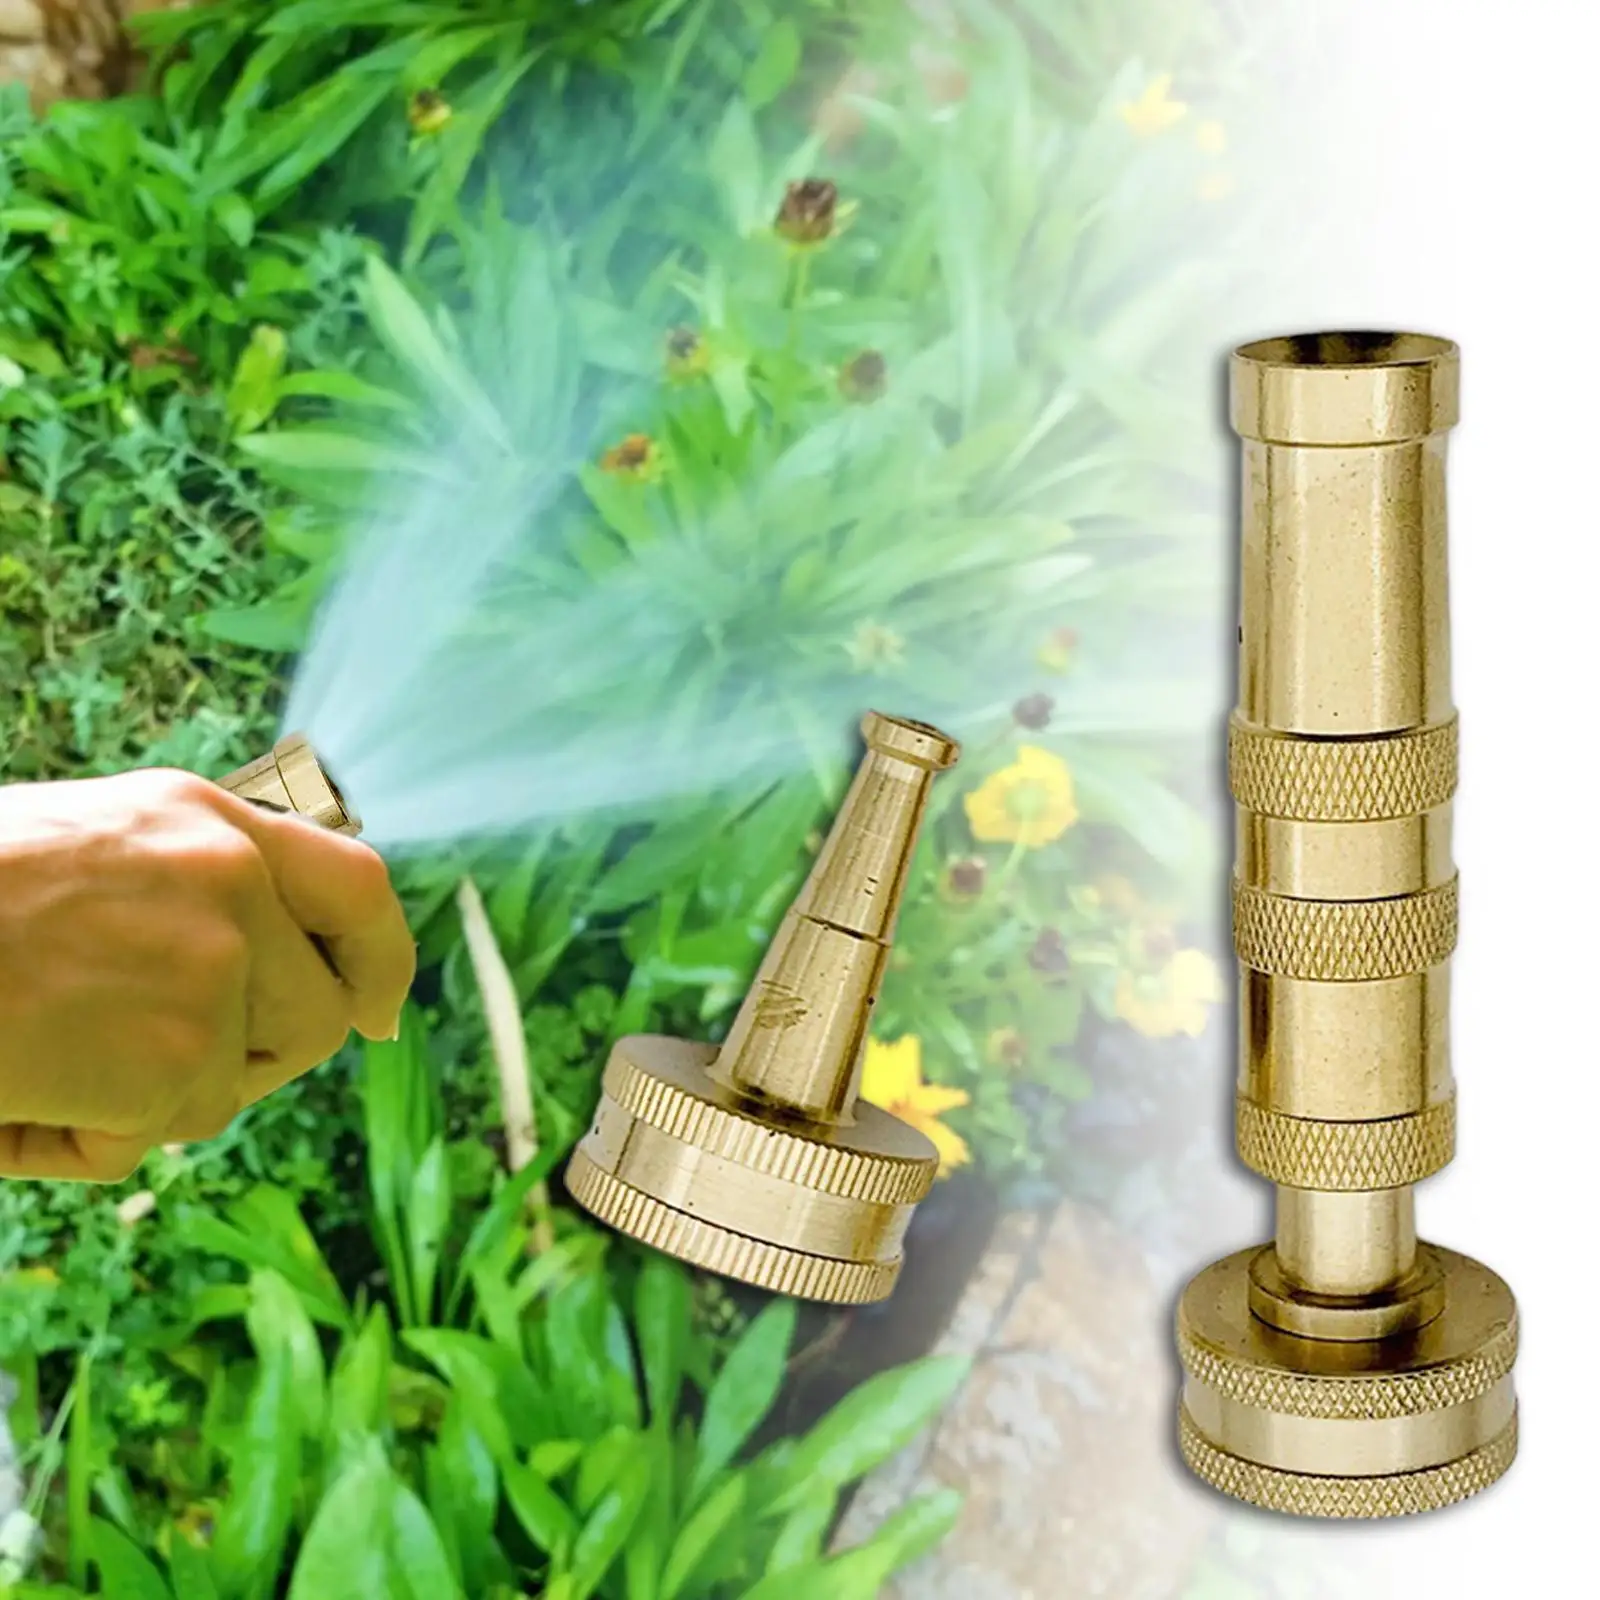 Nozzles Pressure Spray Attachment Water Hose Sprayer Nozzle Garden Hose Nozzle For Walkway House Car Wash Yard